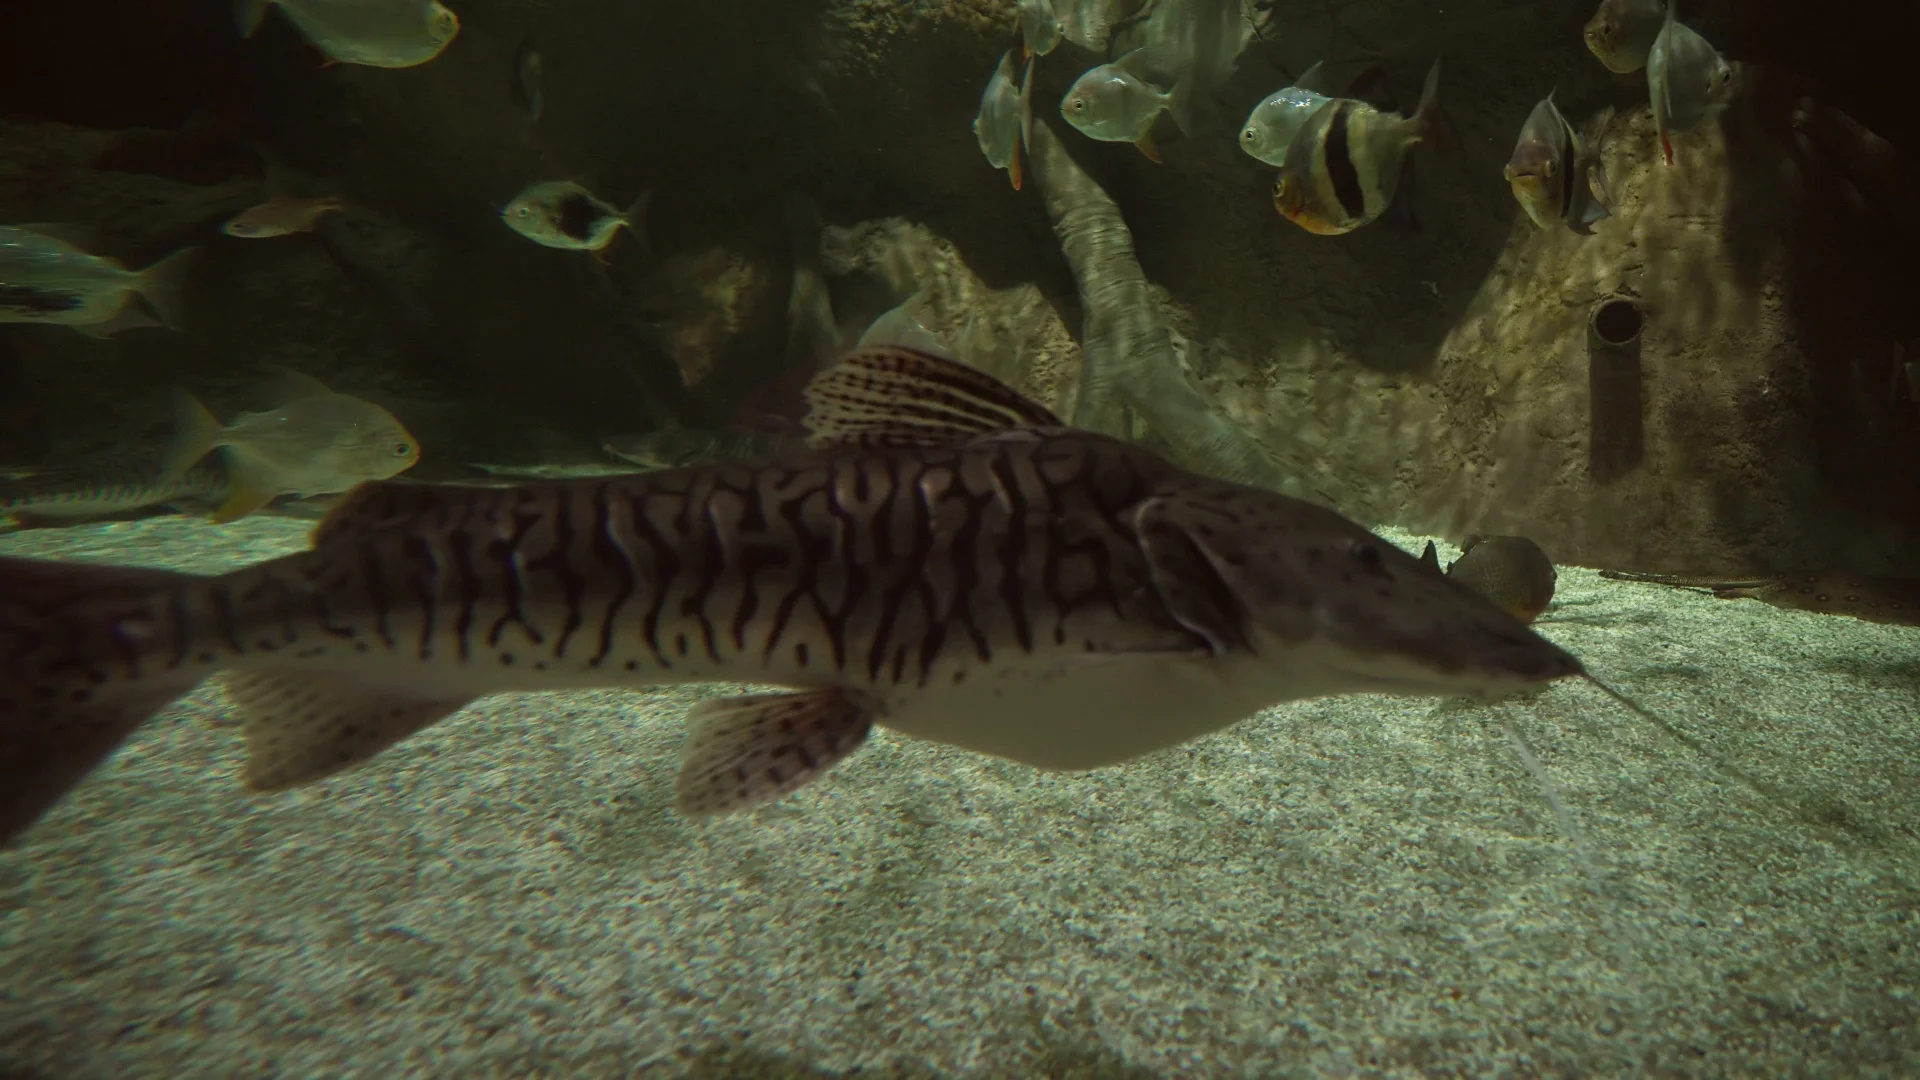 Red Tailed Catfish In Aquarium Freshwater Fish Stock Photo